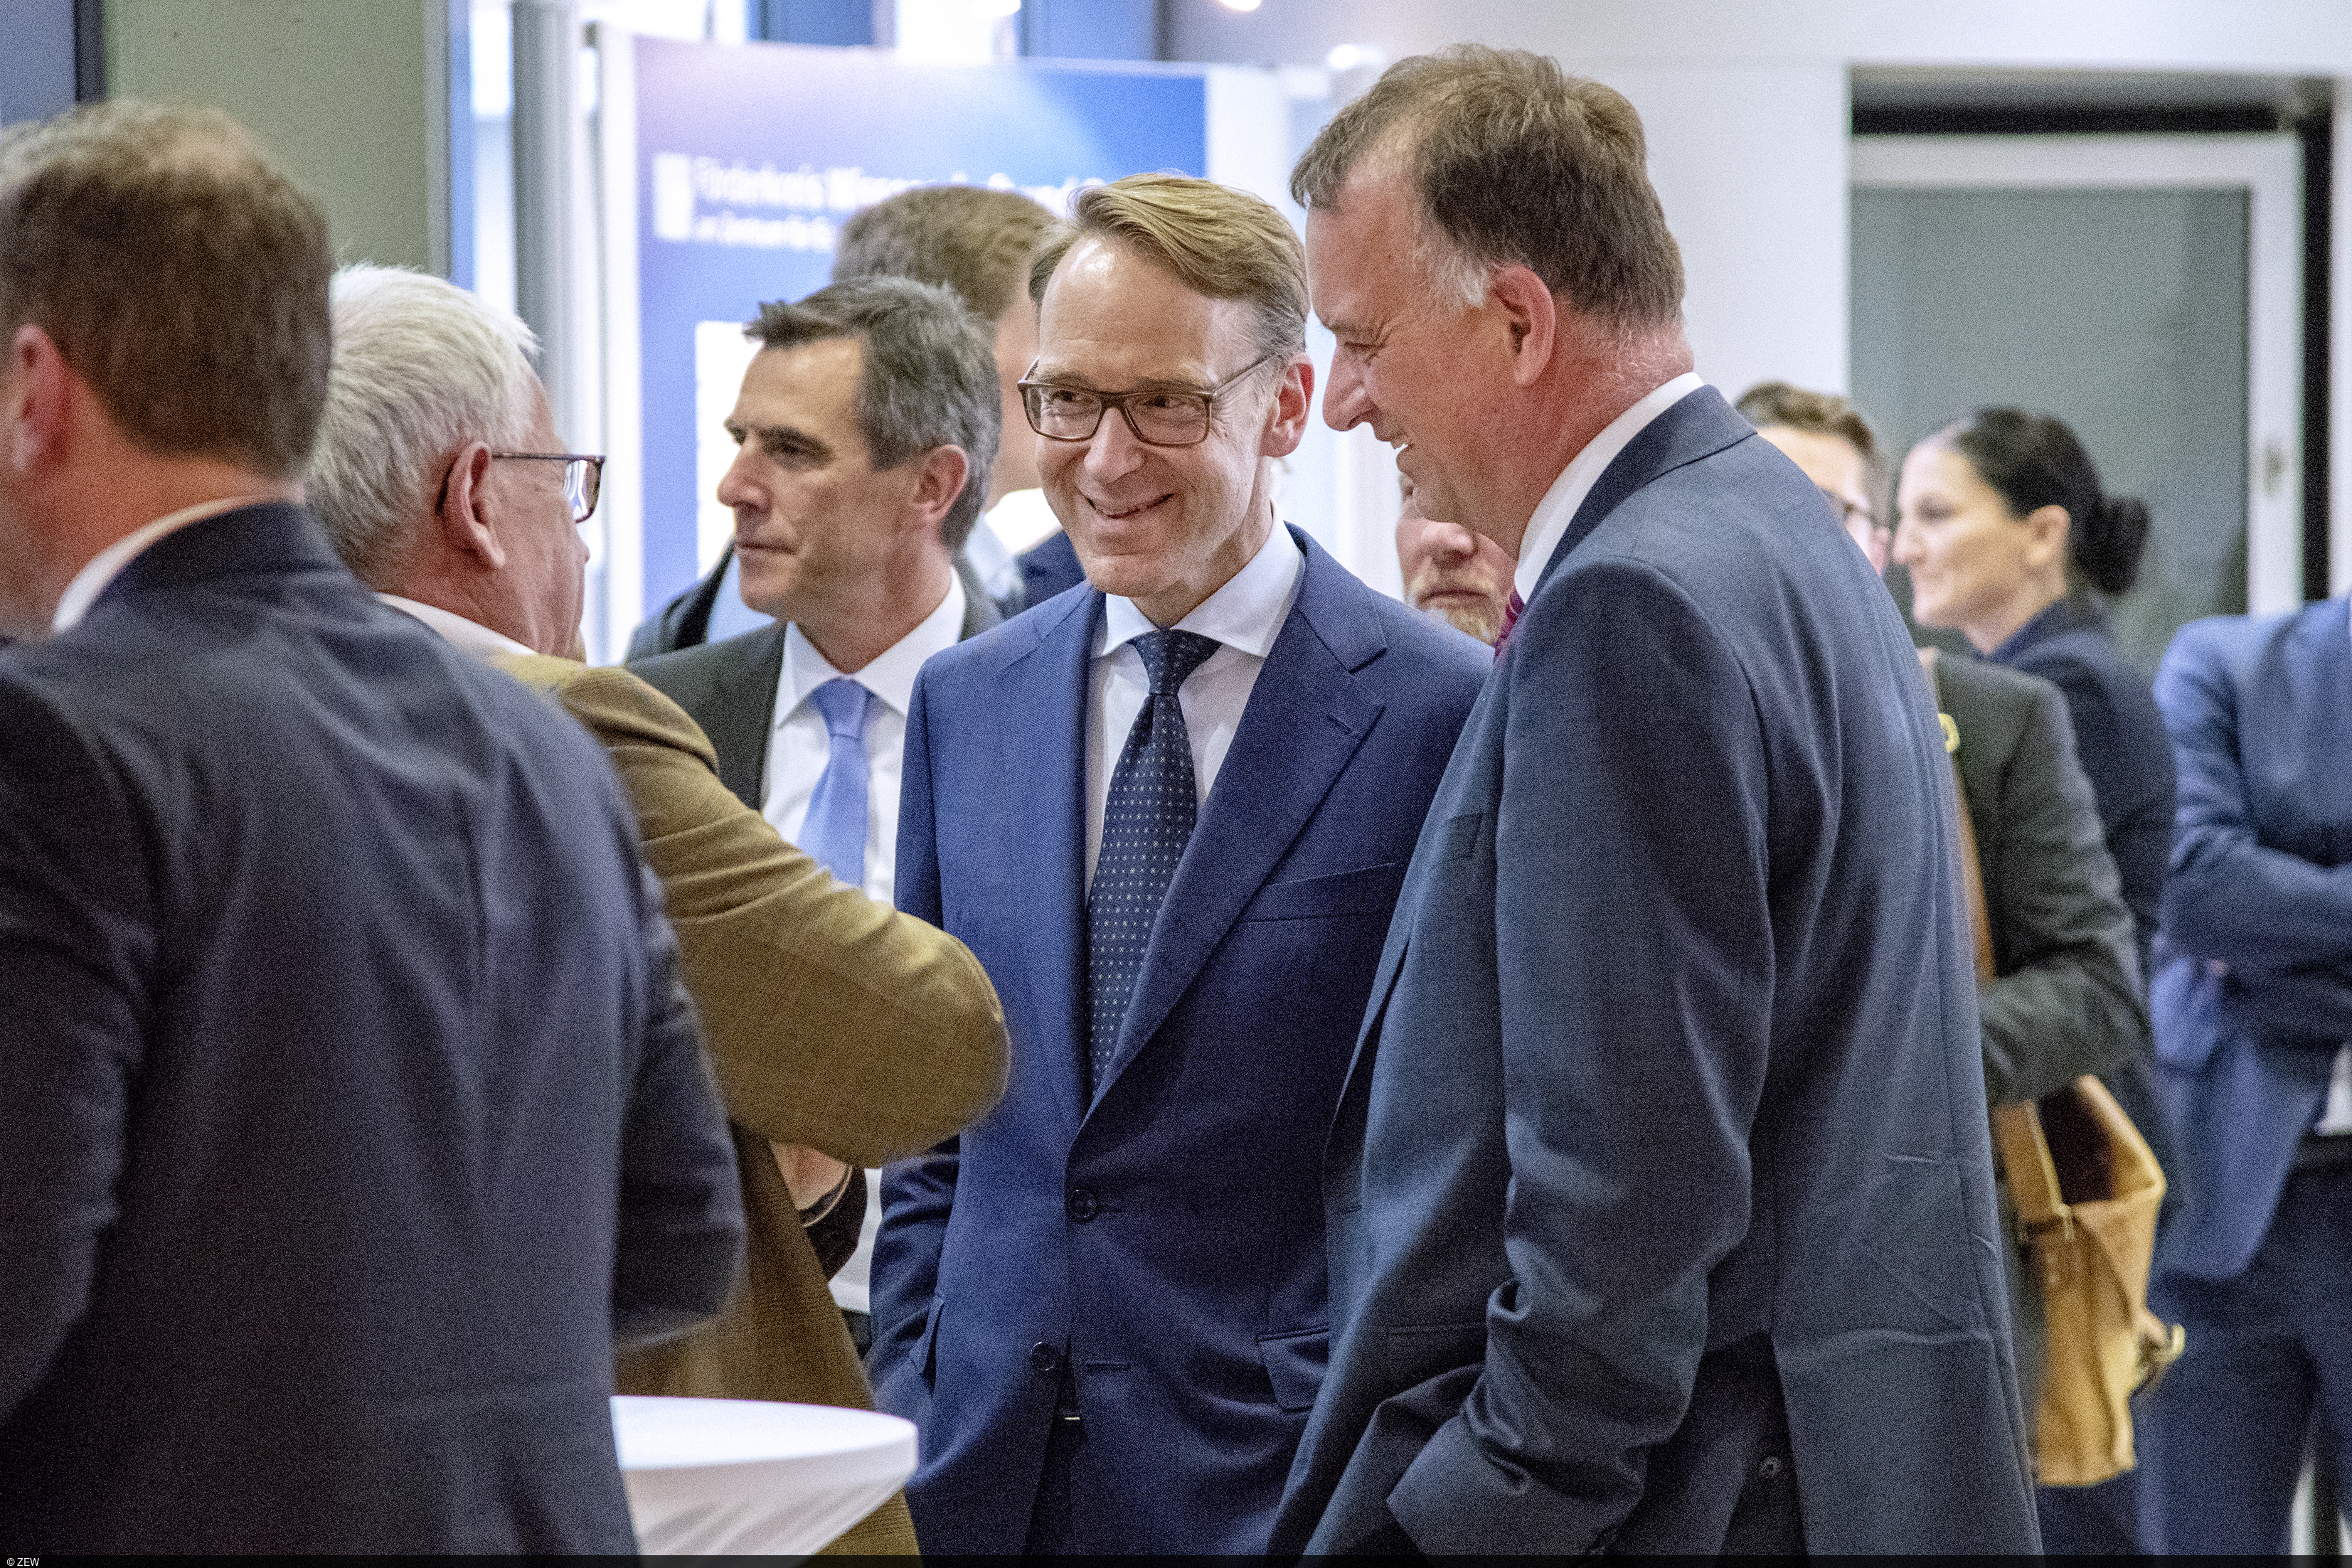 Following his ZEW lecture, Bundesbank President Jens Weidmann talking to guests